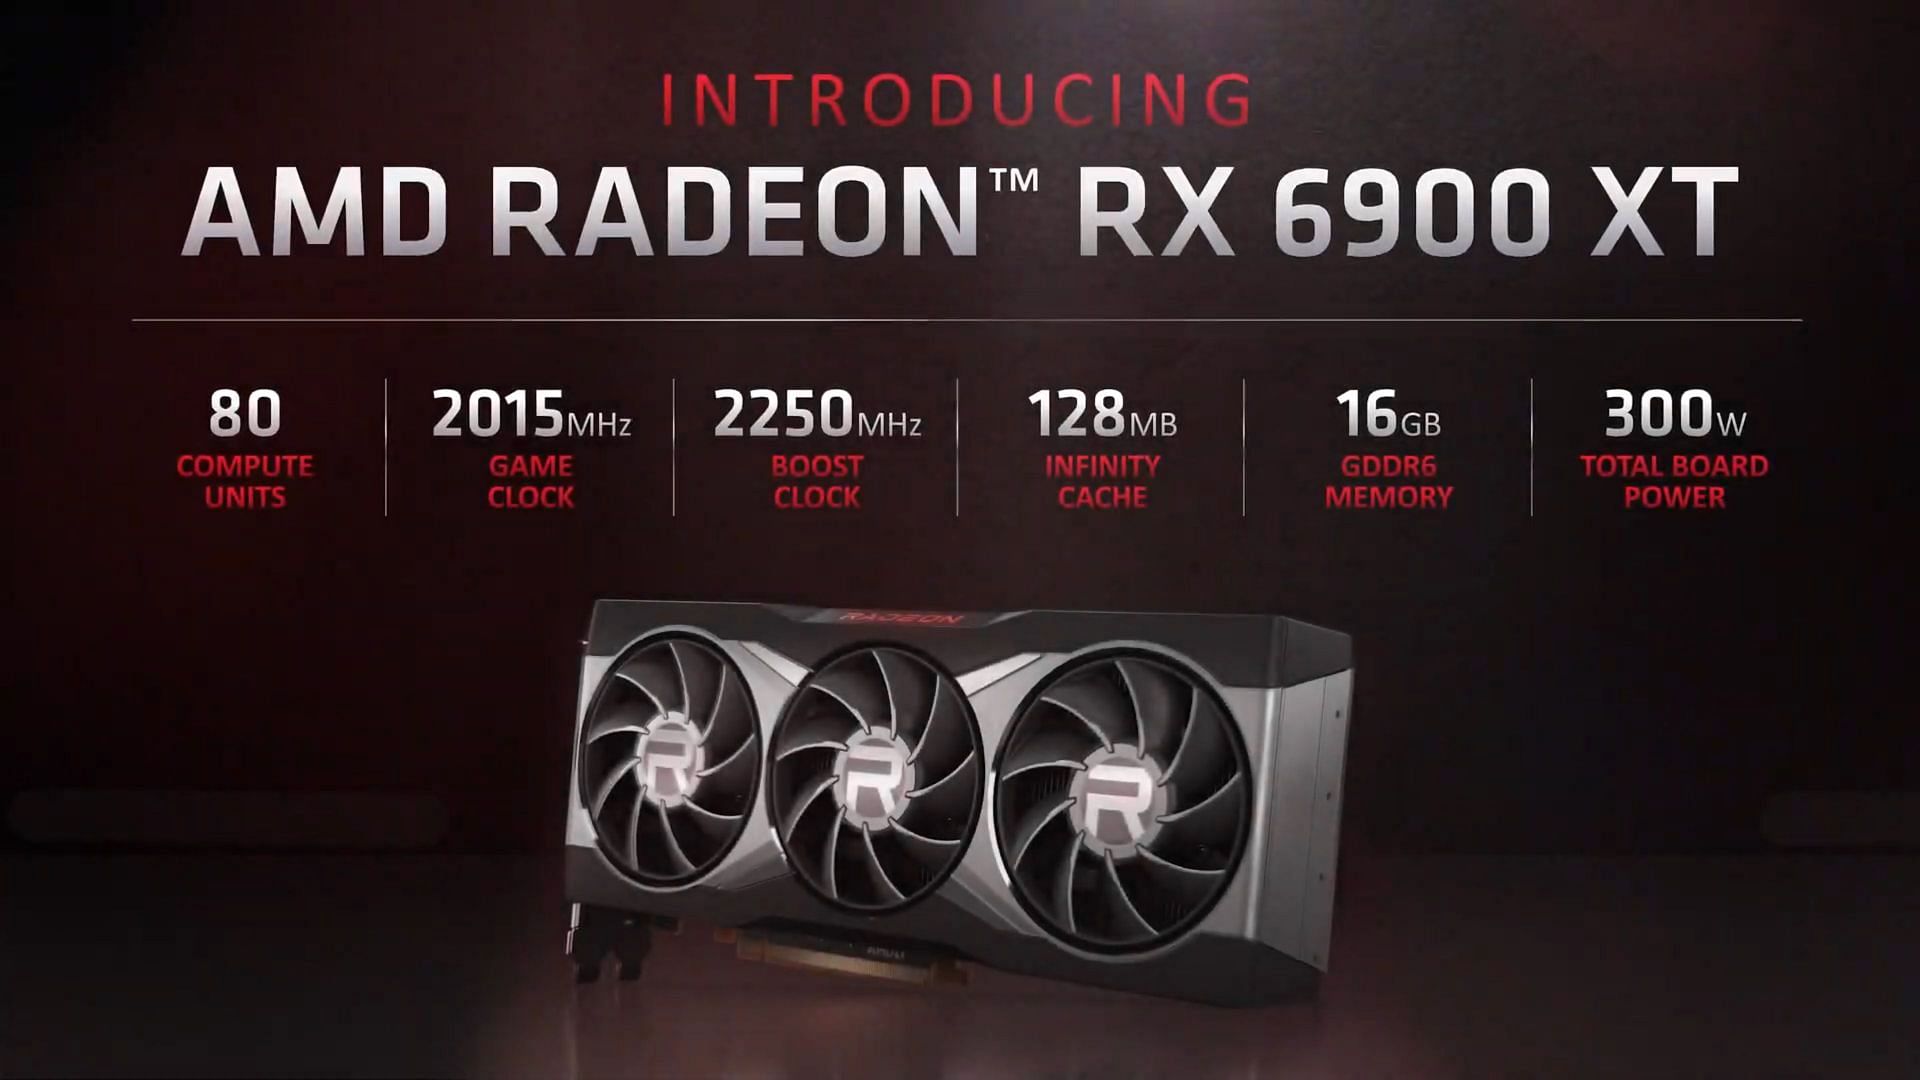 The AMD Radeon RX 6900 XT (Image via AMD)